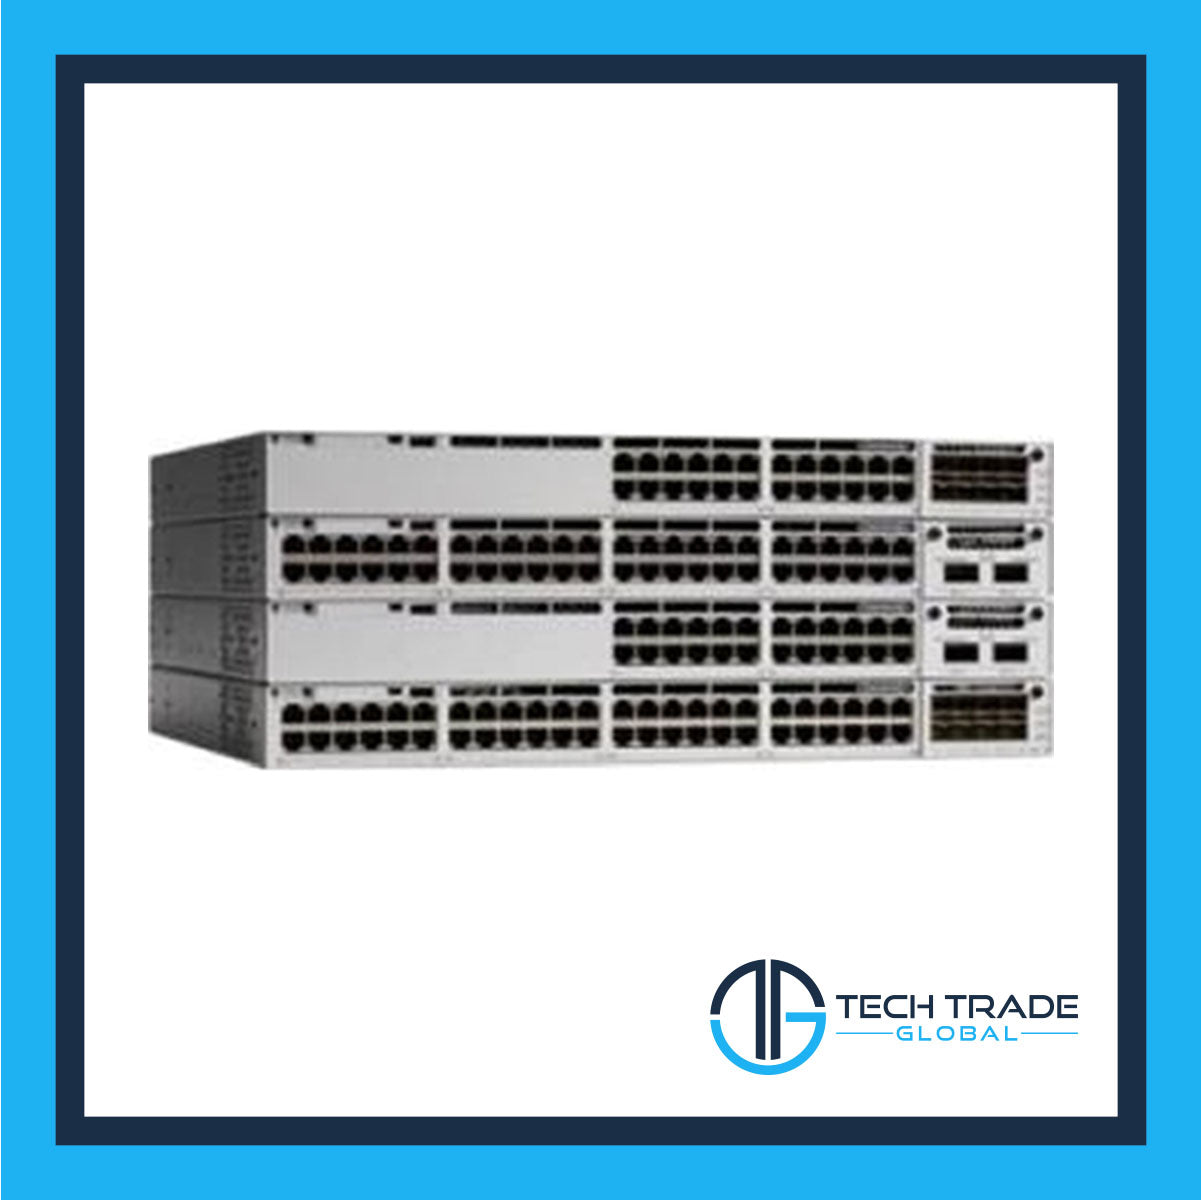 C9300-48T-A | Cisco Catalyst 9300 - Network Advantage - switch - 48 ports - managed - rac